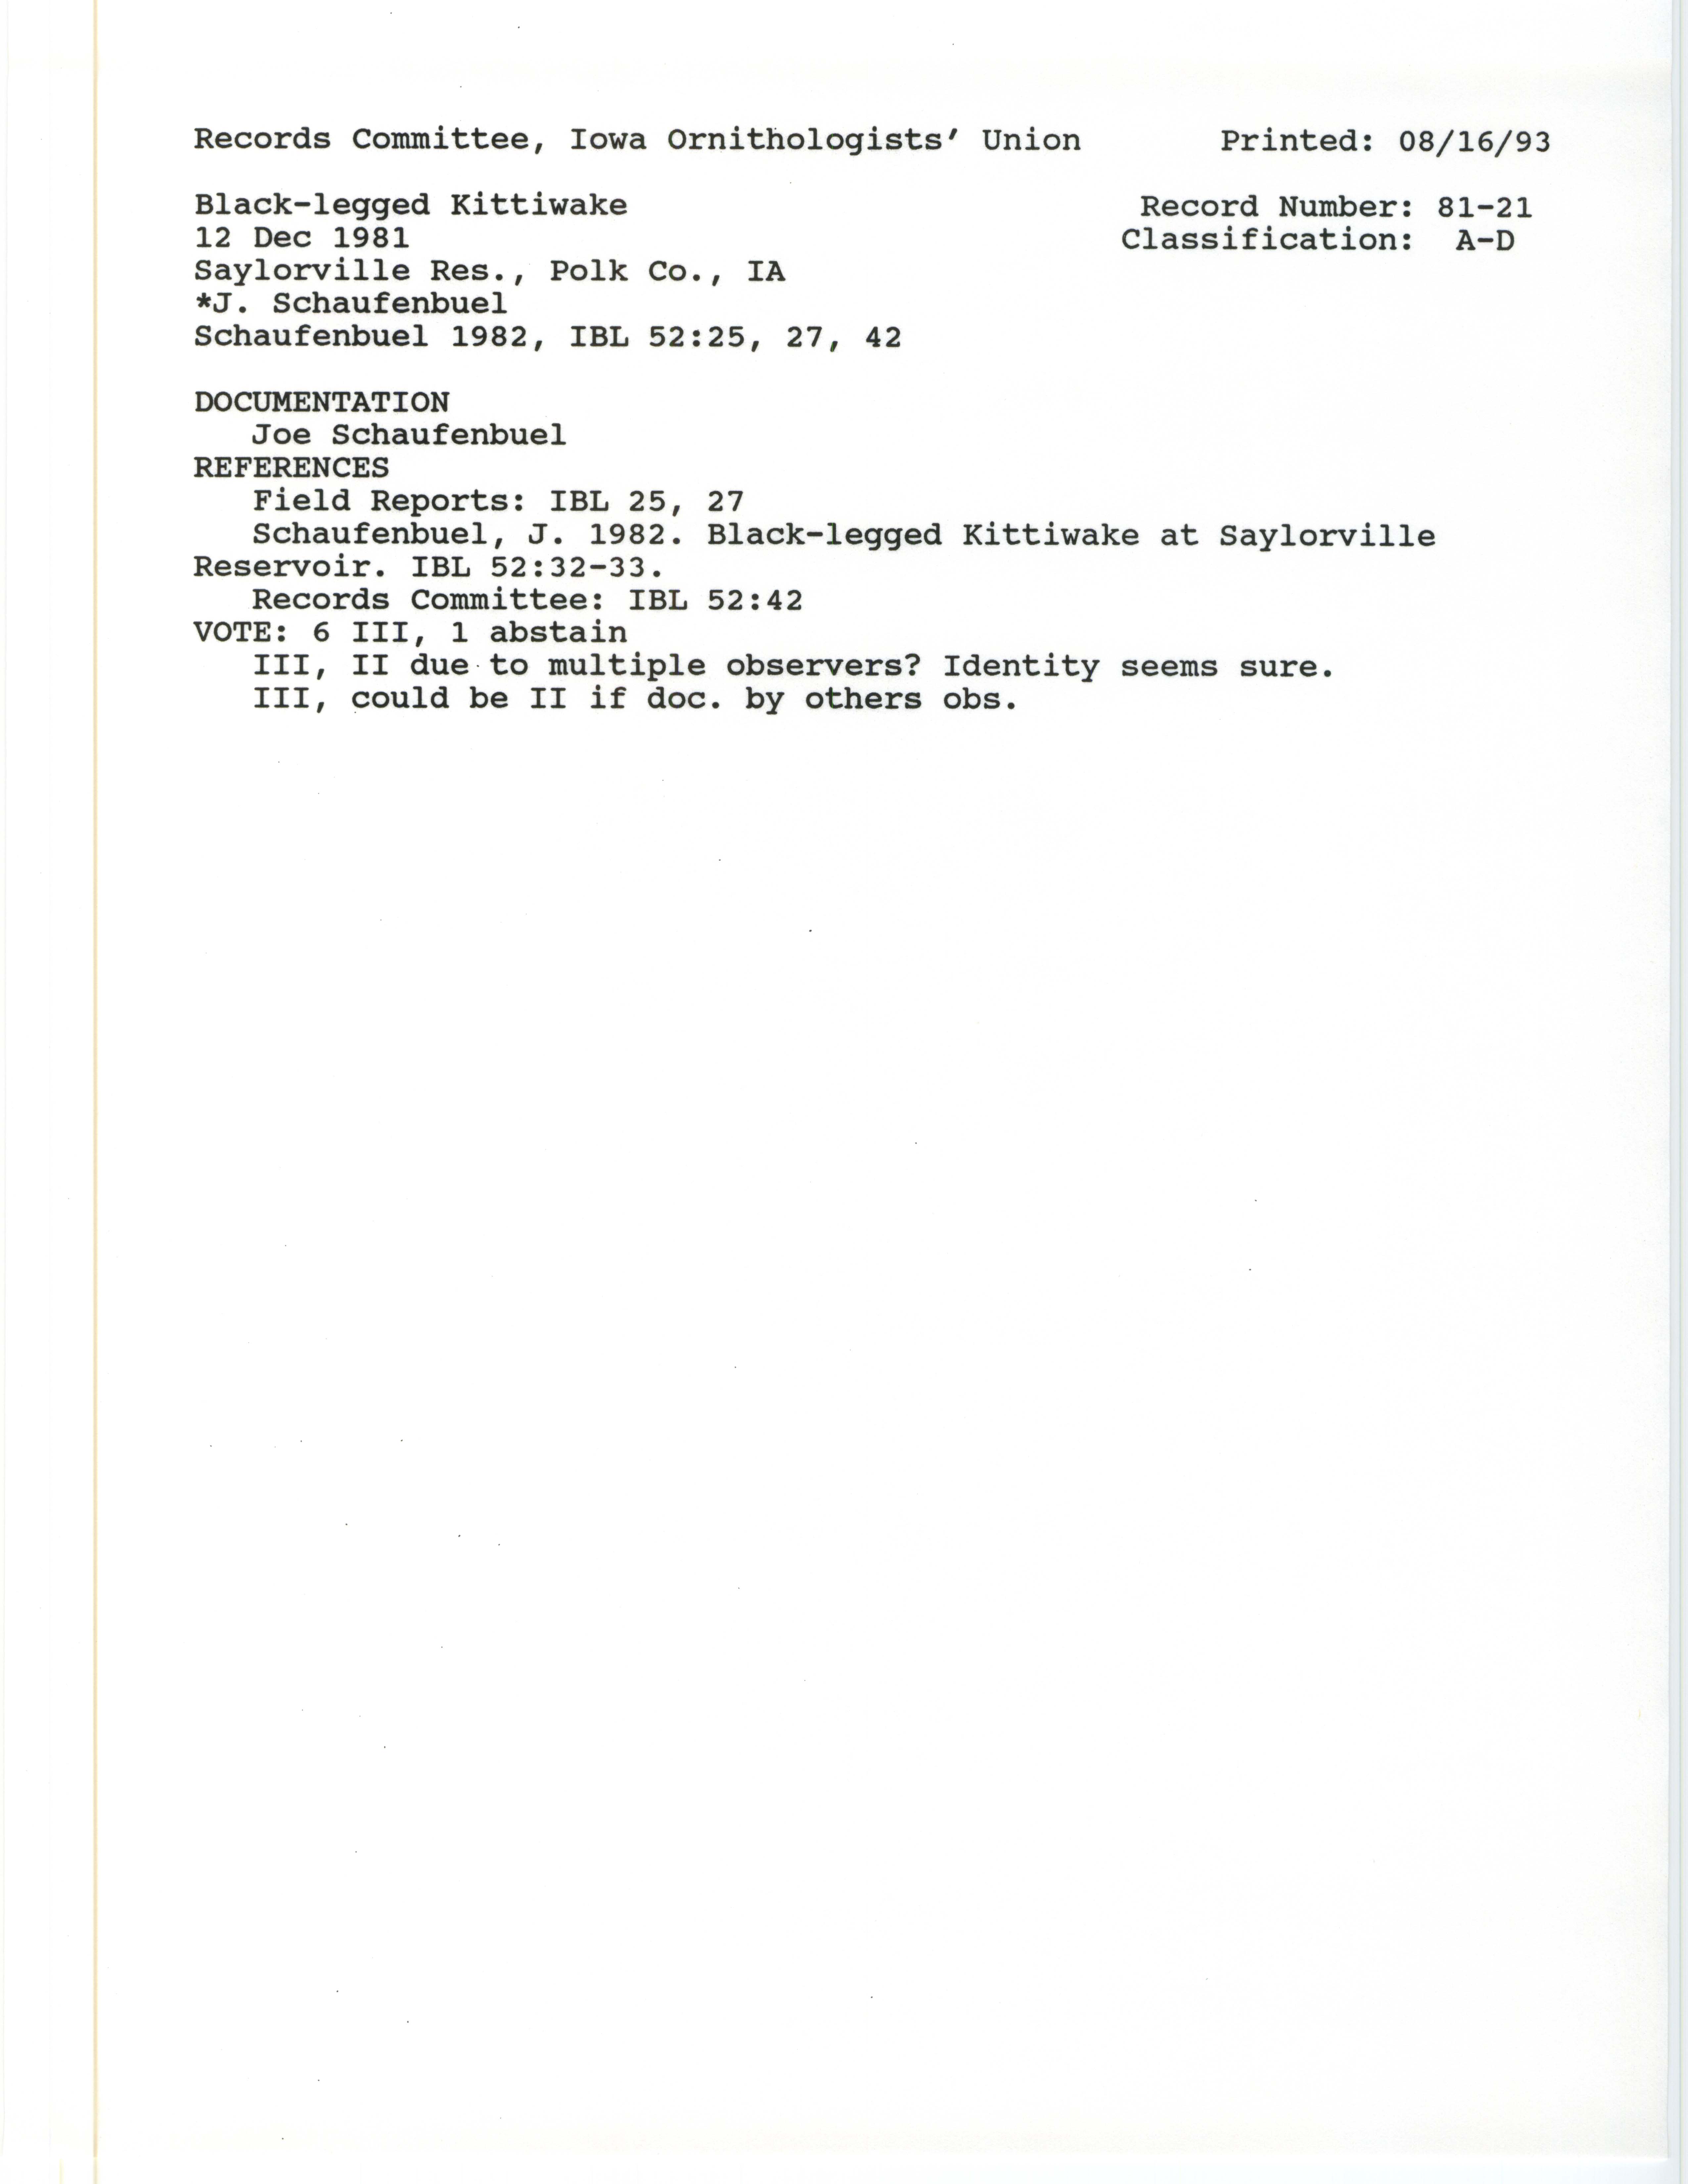 Records Committee review for rare bird sighting for Black-legged Kittiwake at Saylorville Dam, 1981